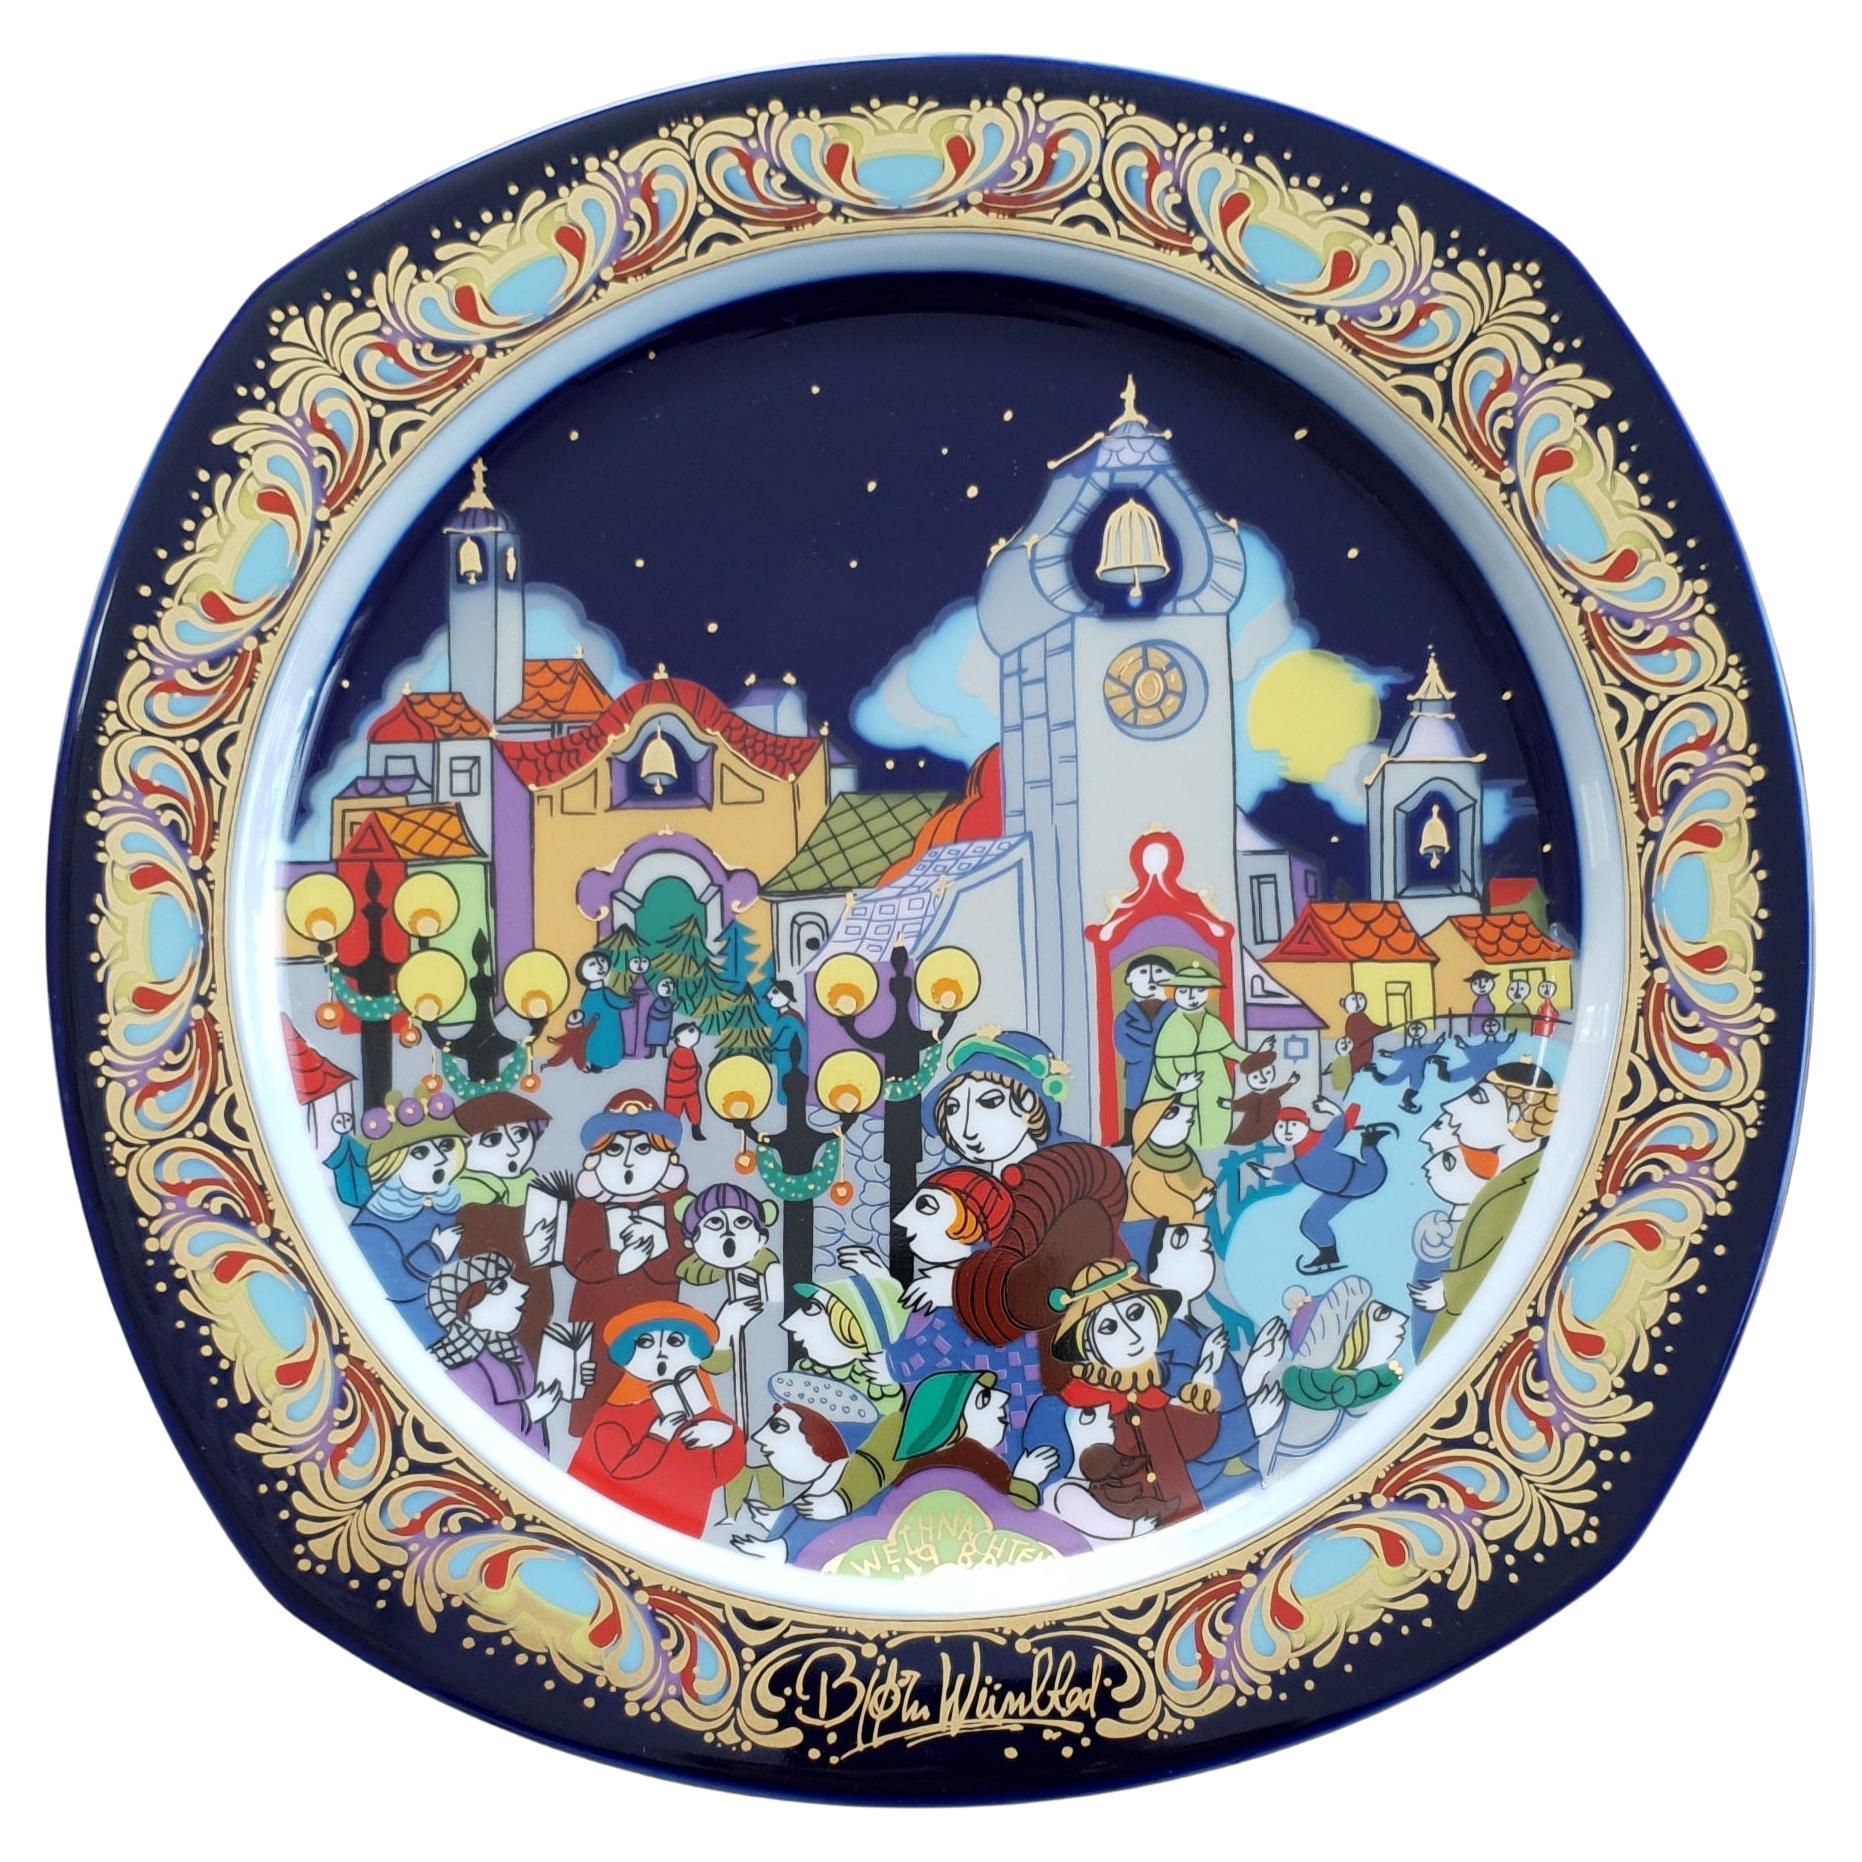 Bjørn Wiinblad Christmas plate 1988 "Christmas Carols" For Sale